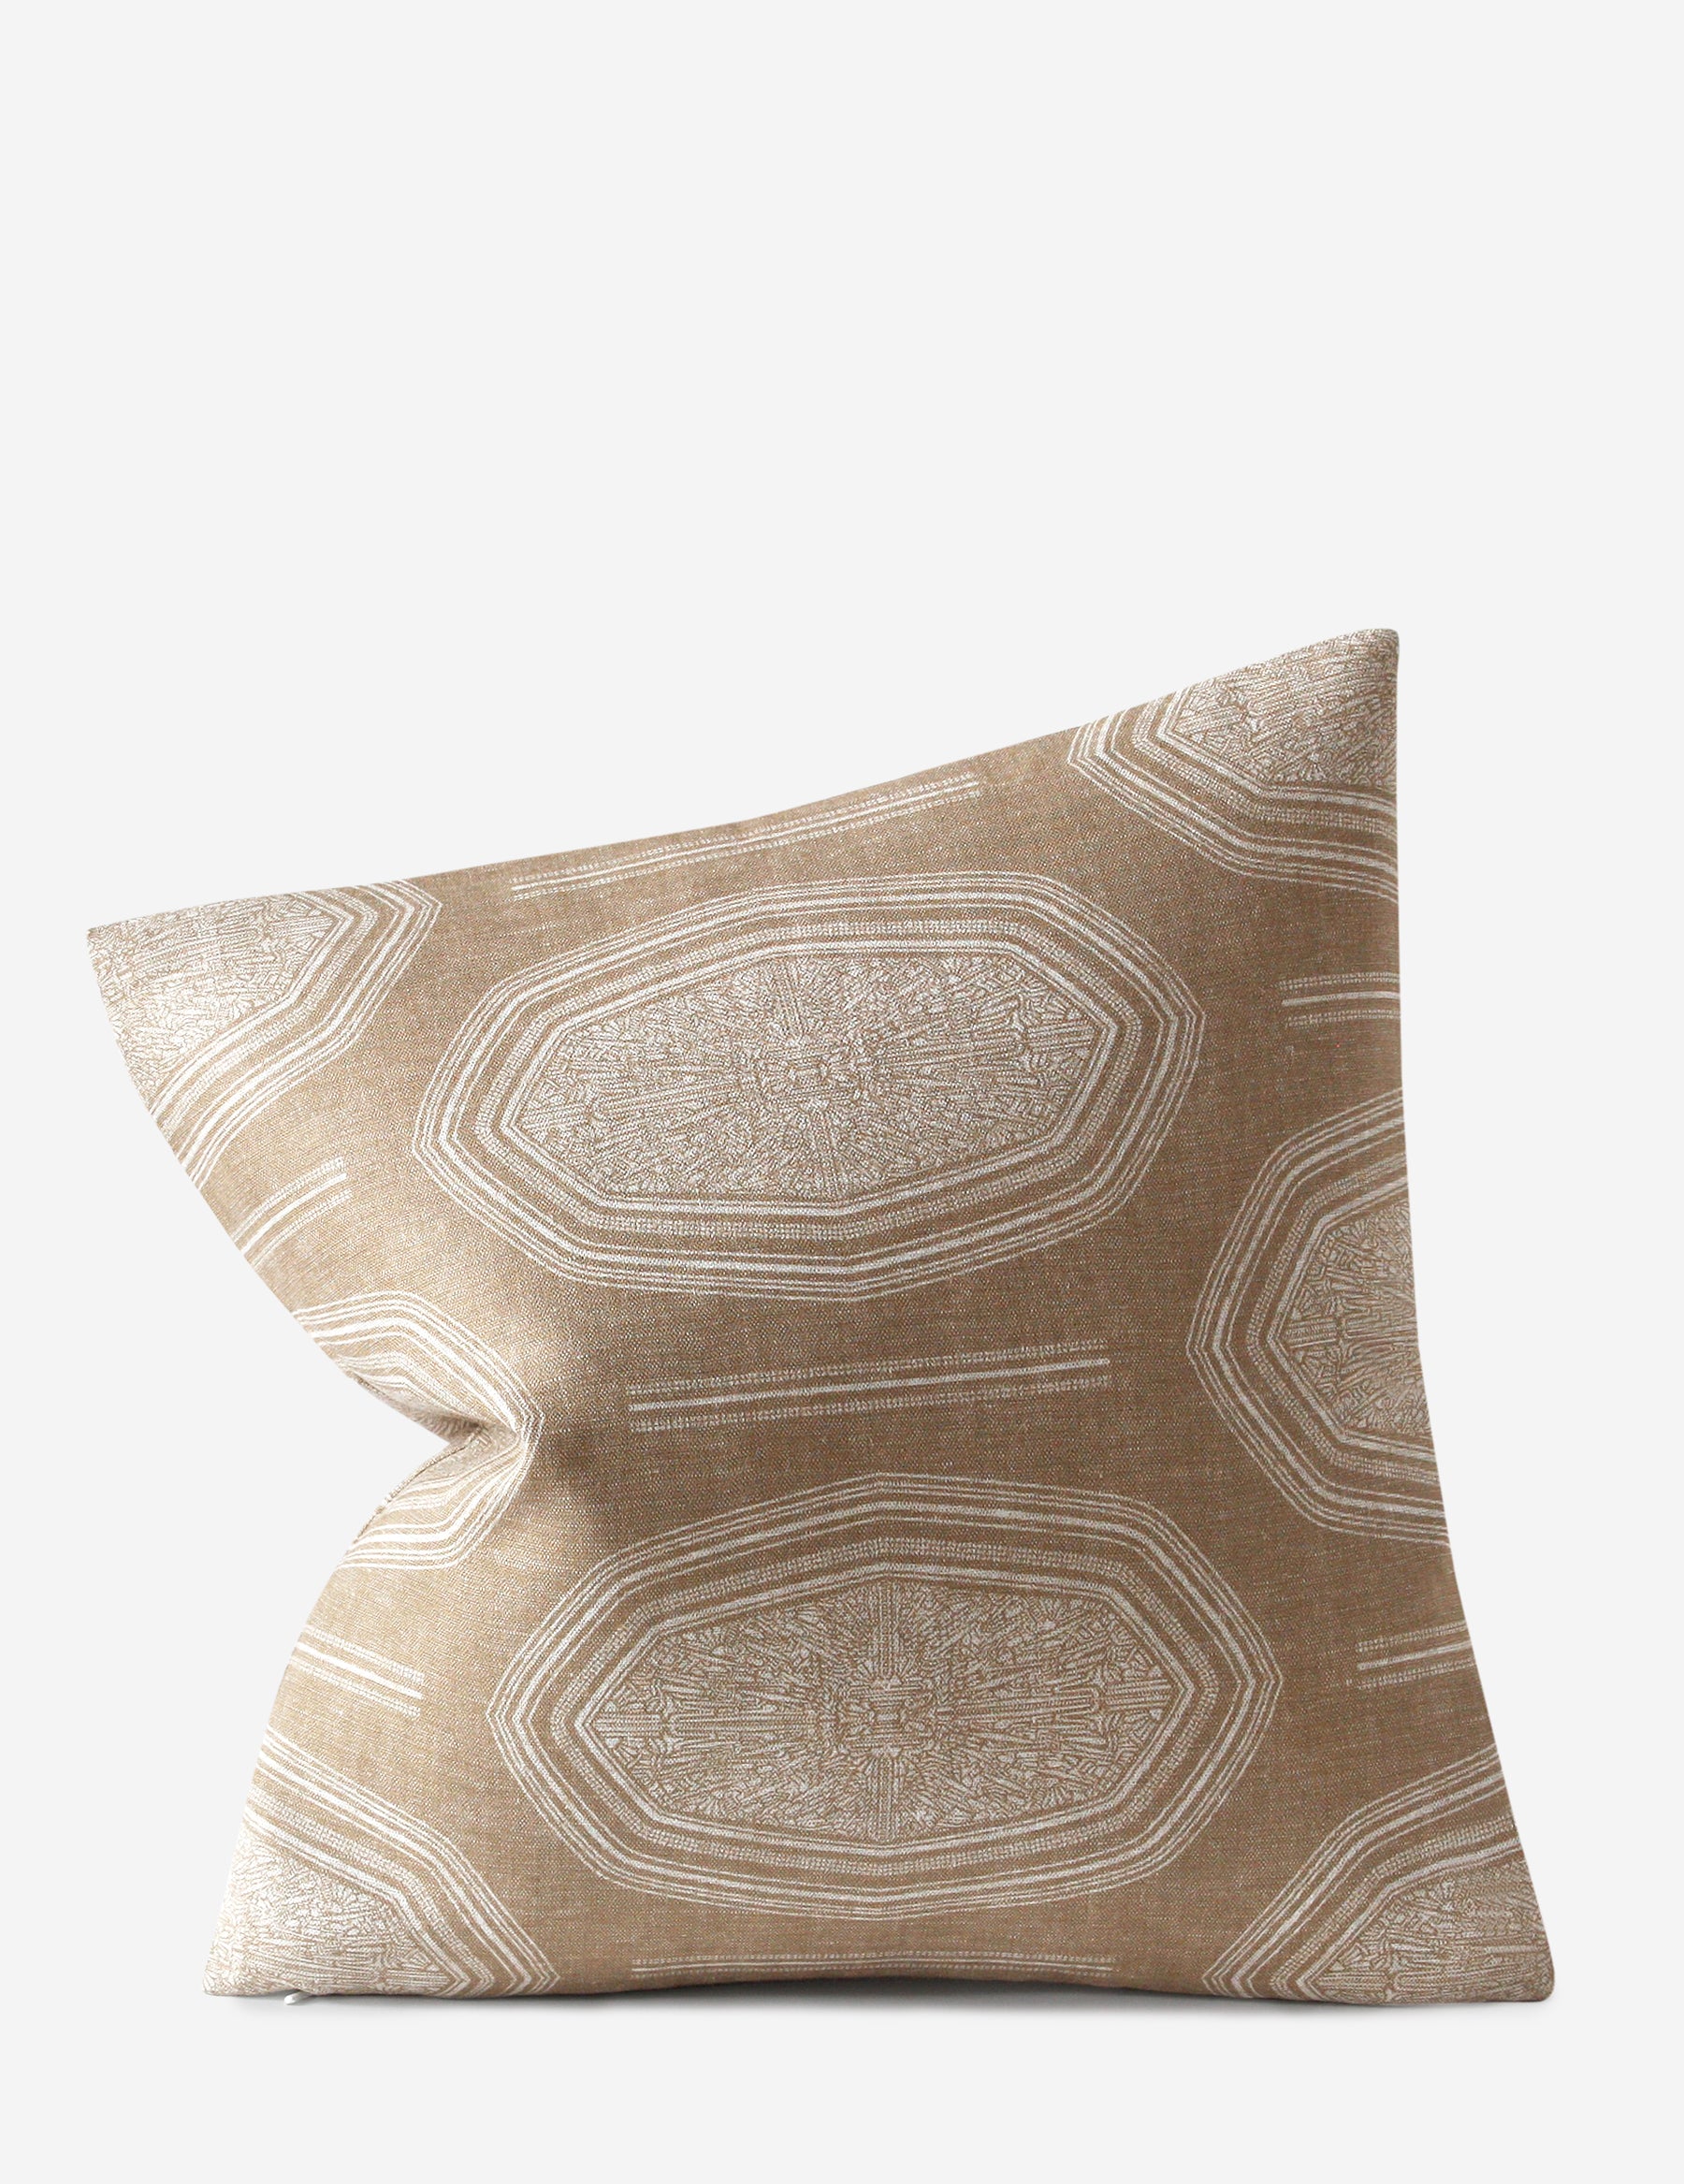 Kamba Pillow / Sand Natural